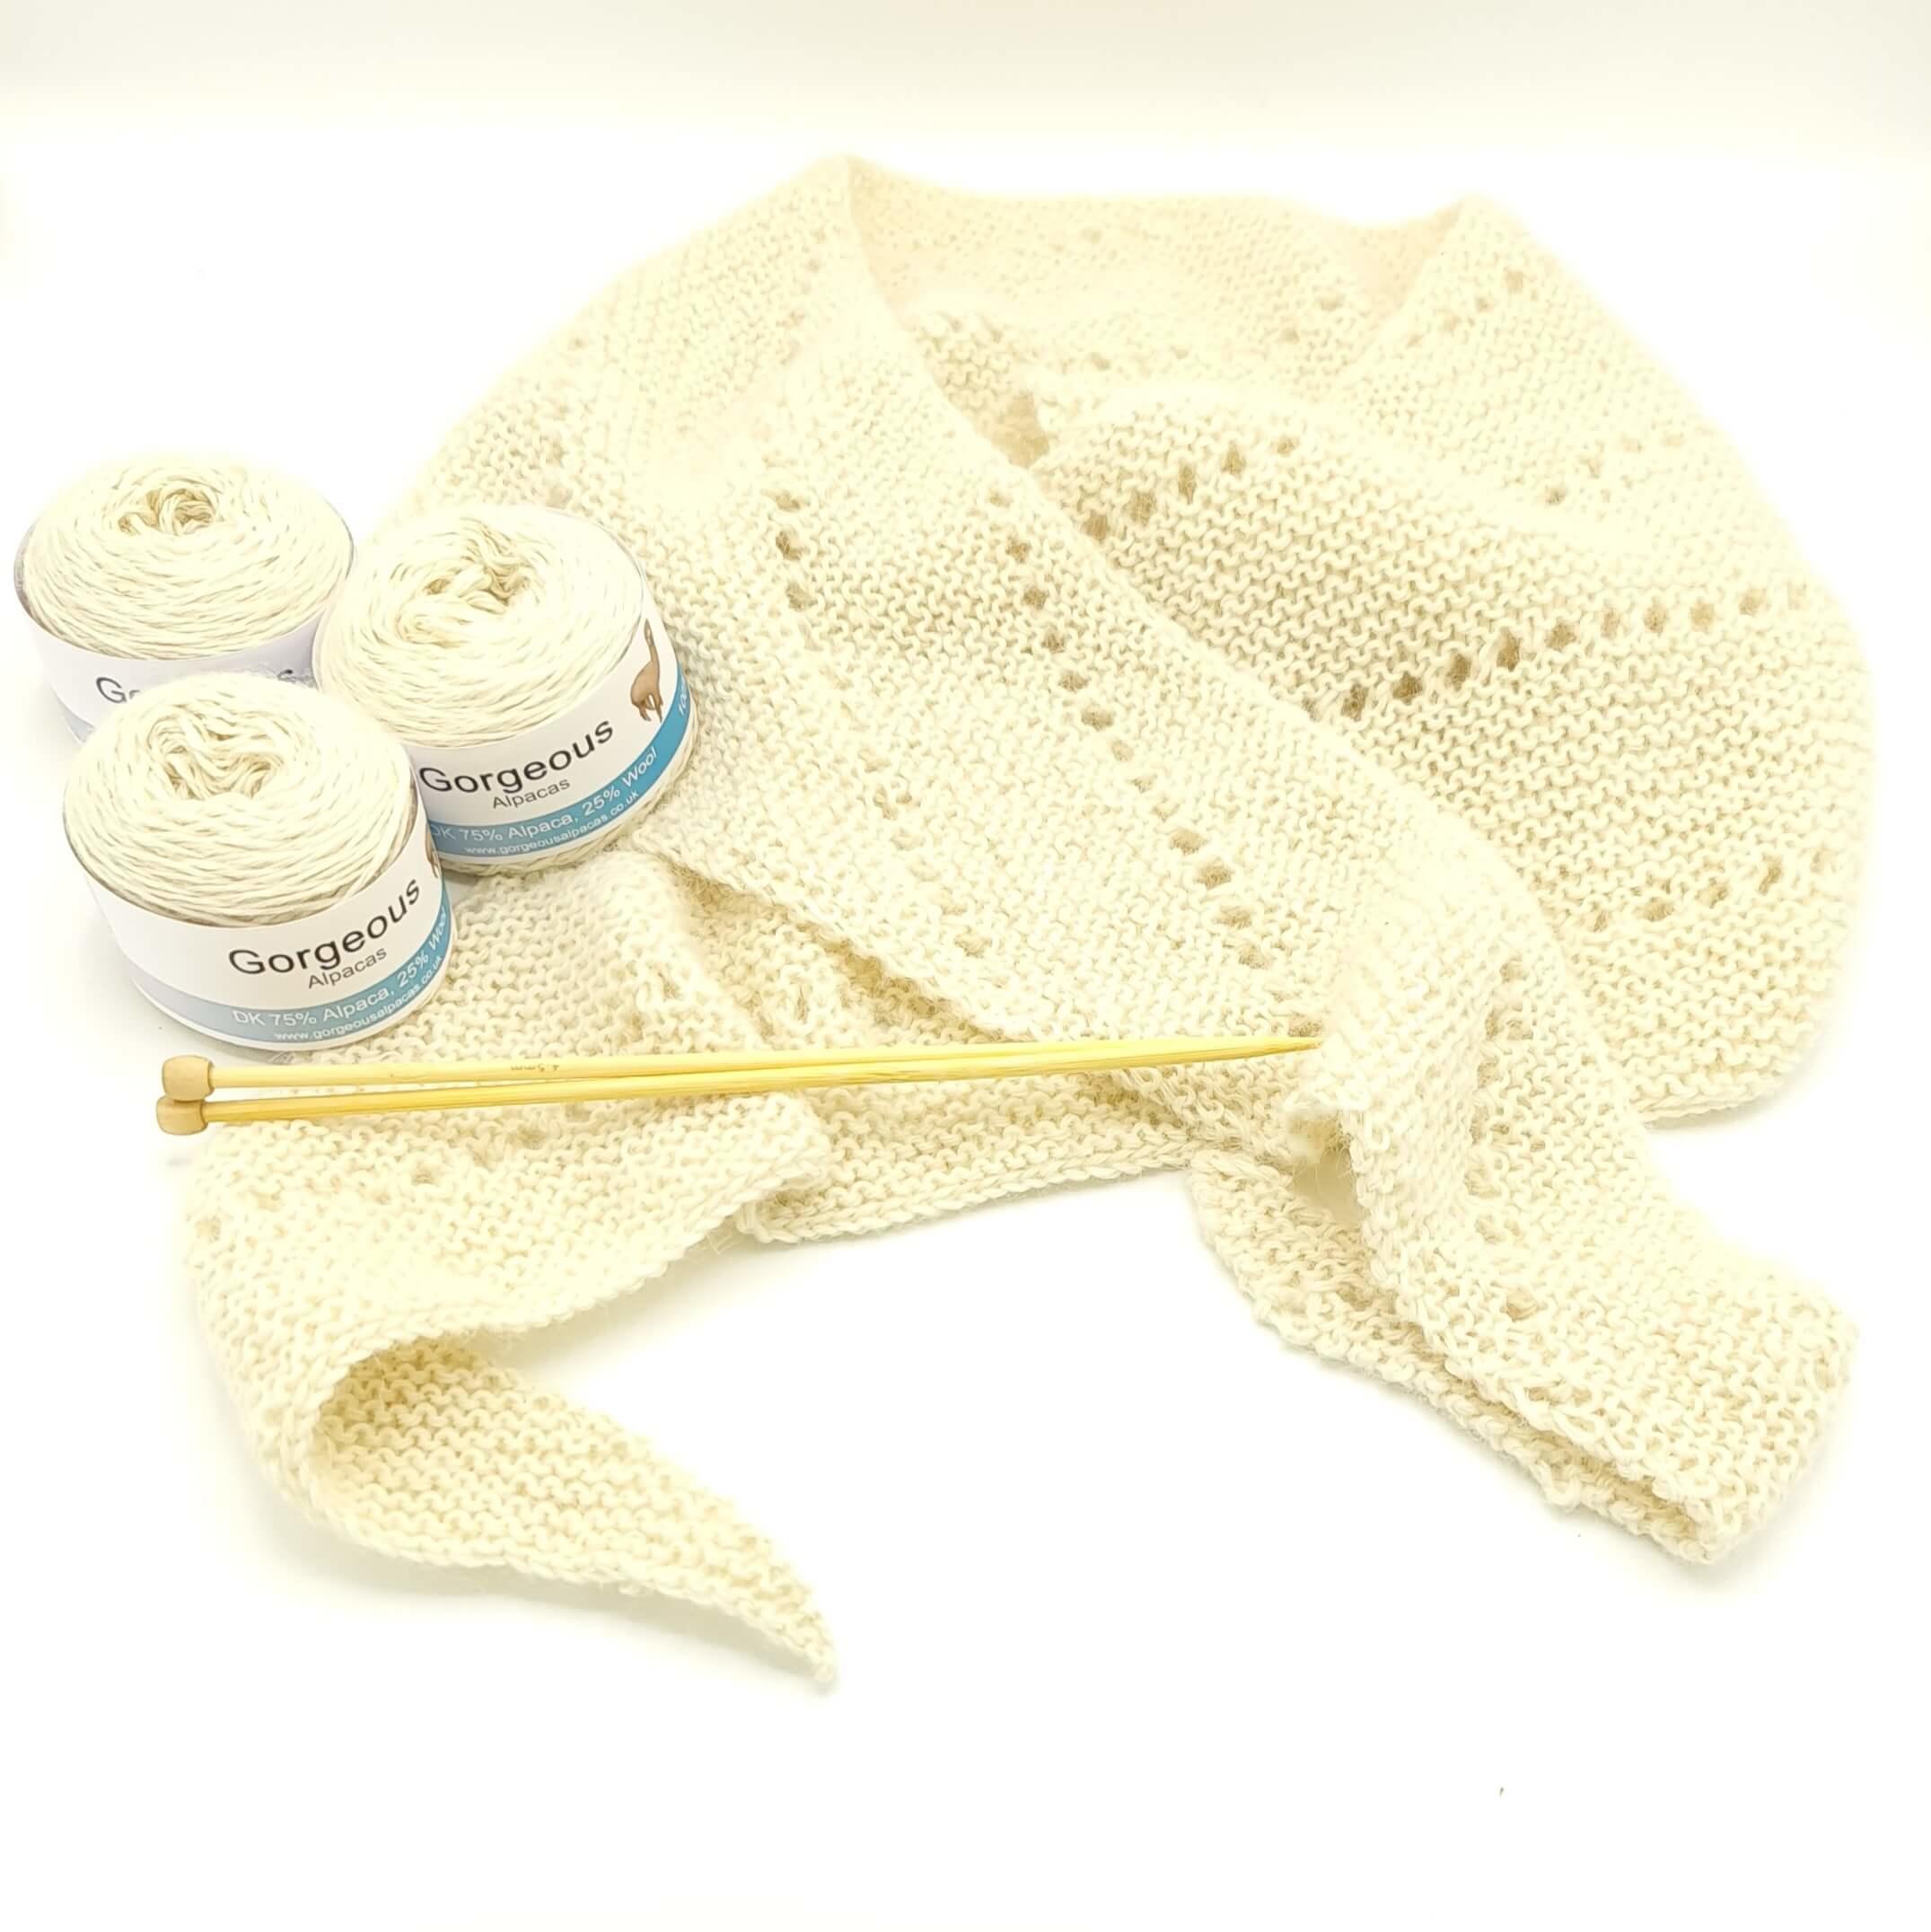 Cowl knitting kit with alpaca yarn